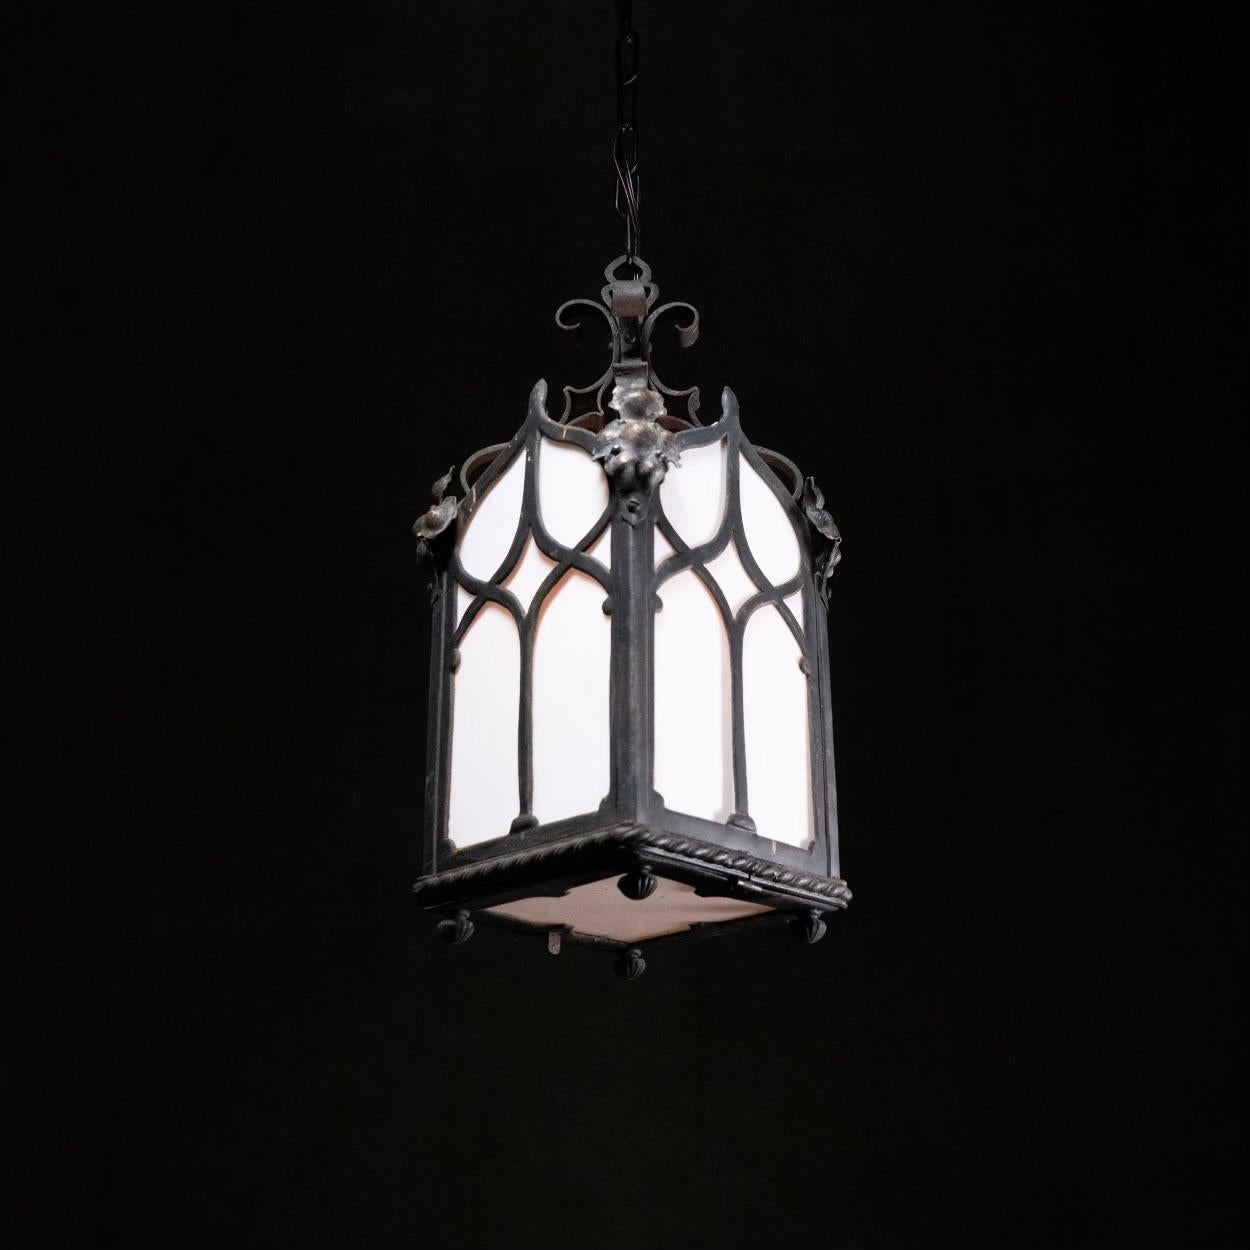 Gothic Revival 1920 Italian gothic revival iron lantern pendant light  For Sale